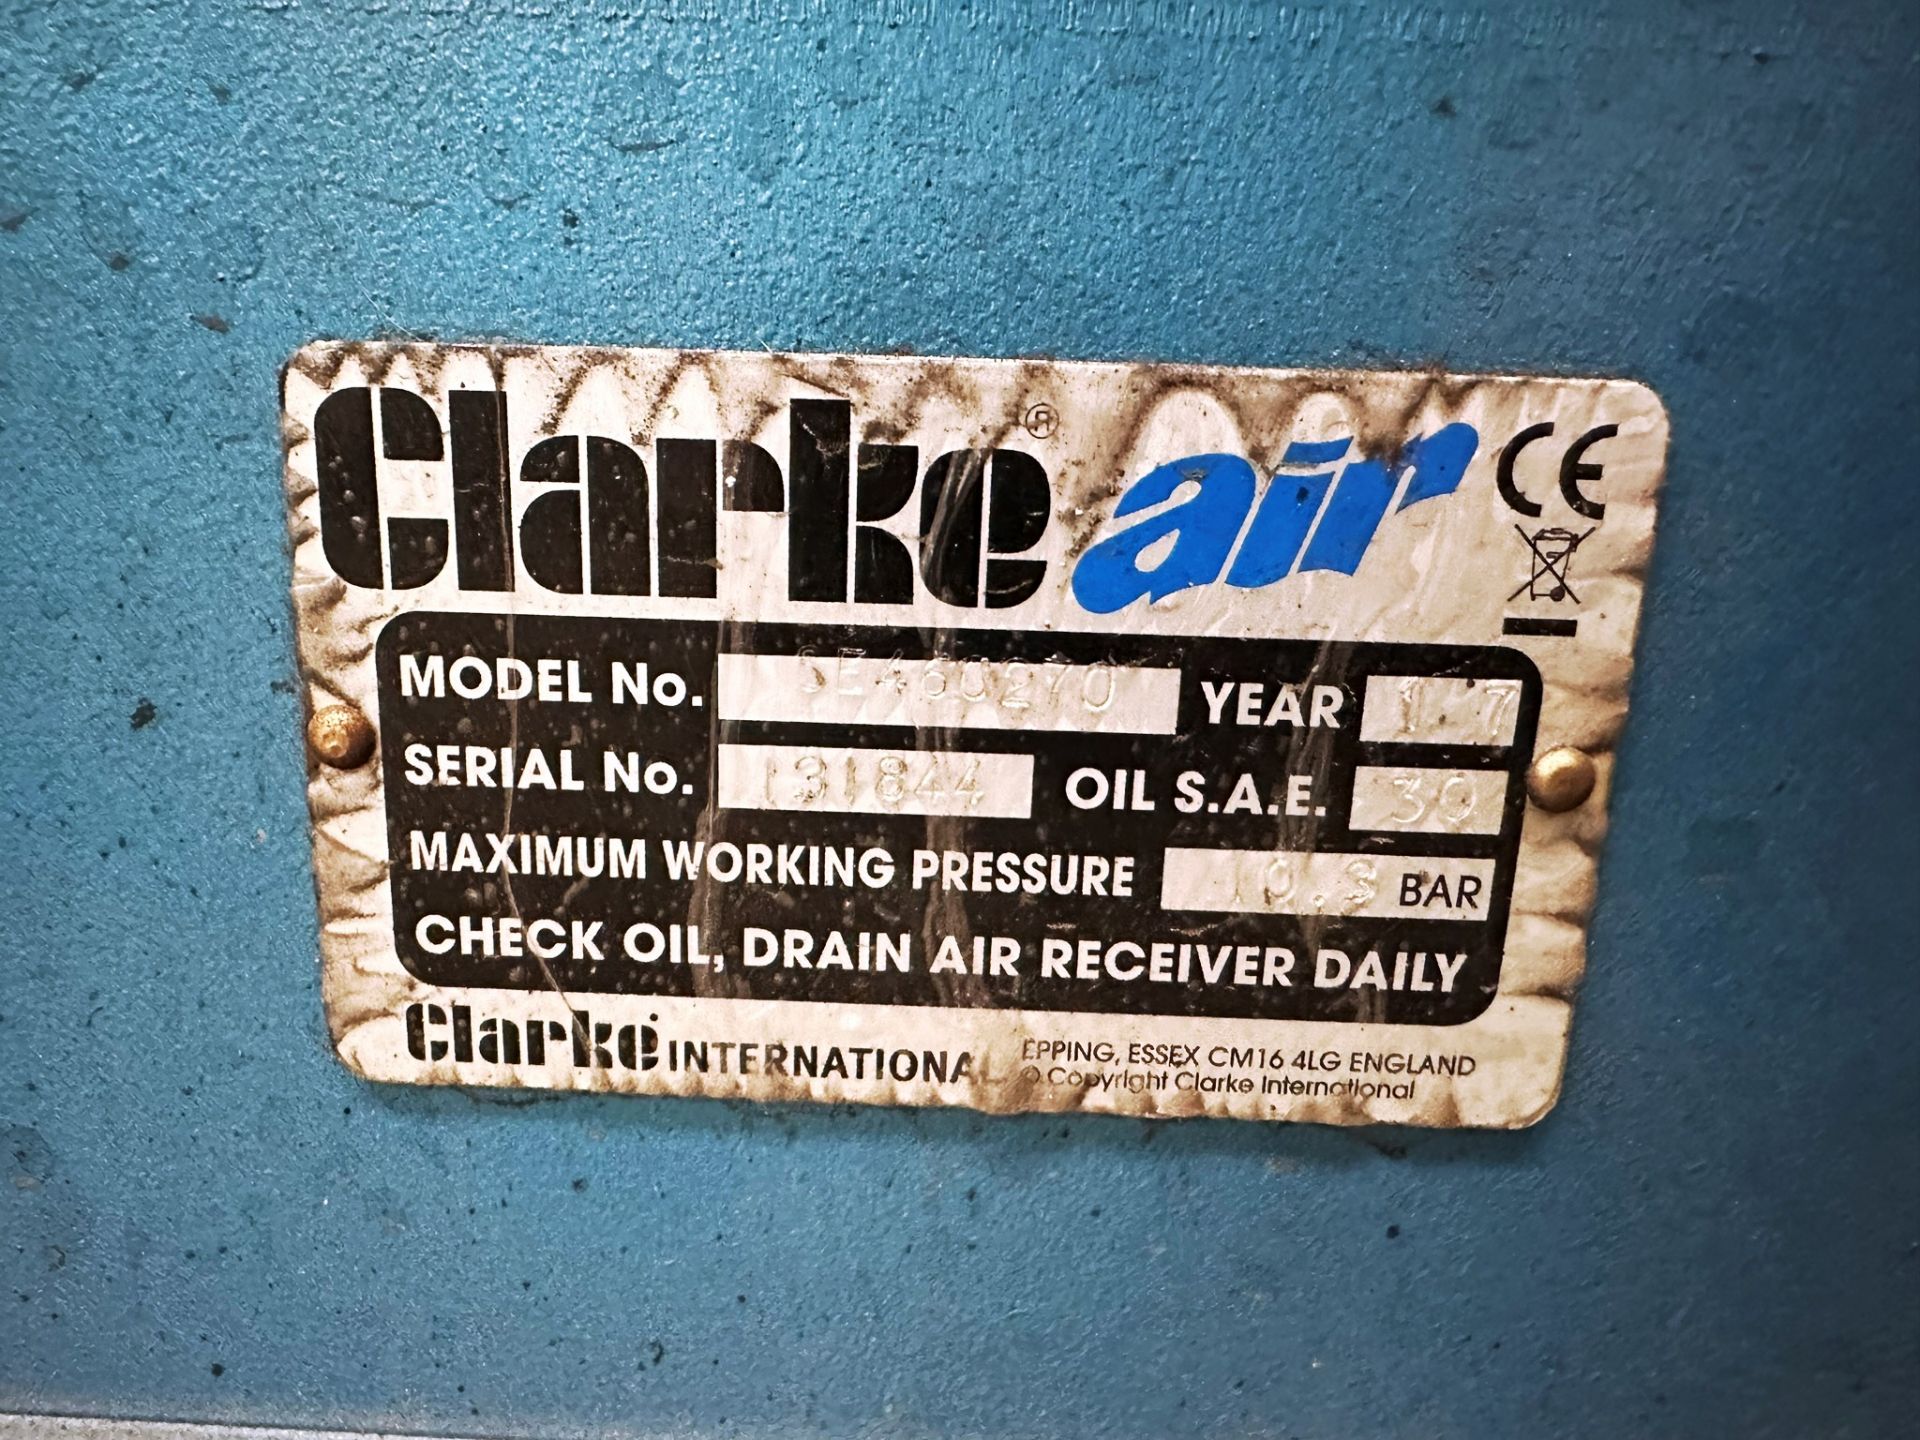 ClarkeAir Industrial Air Compressor | YOM: 2017 - Image 2 of 2